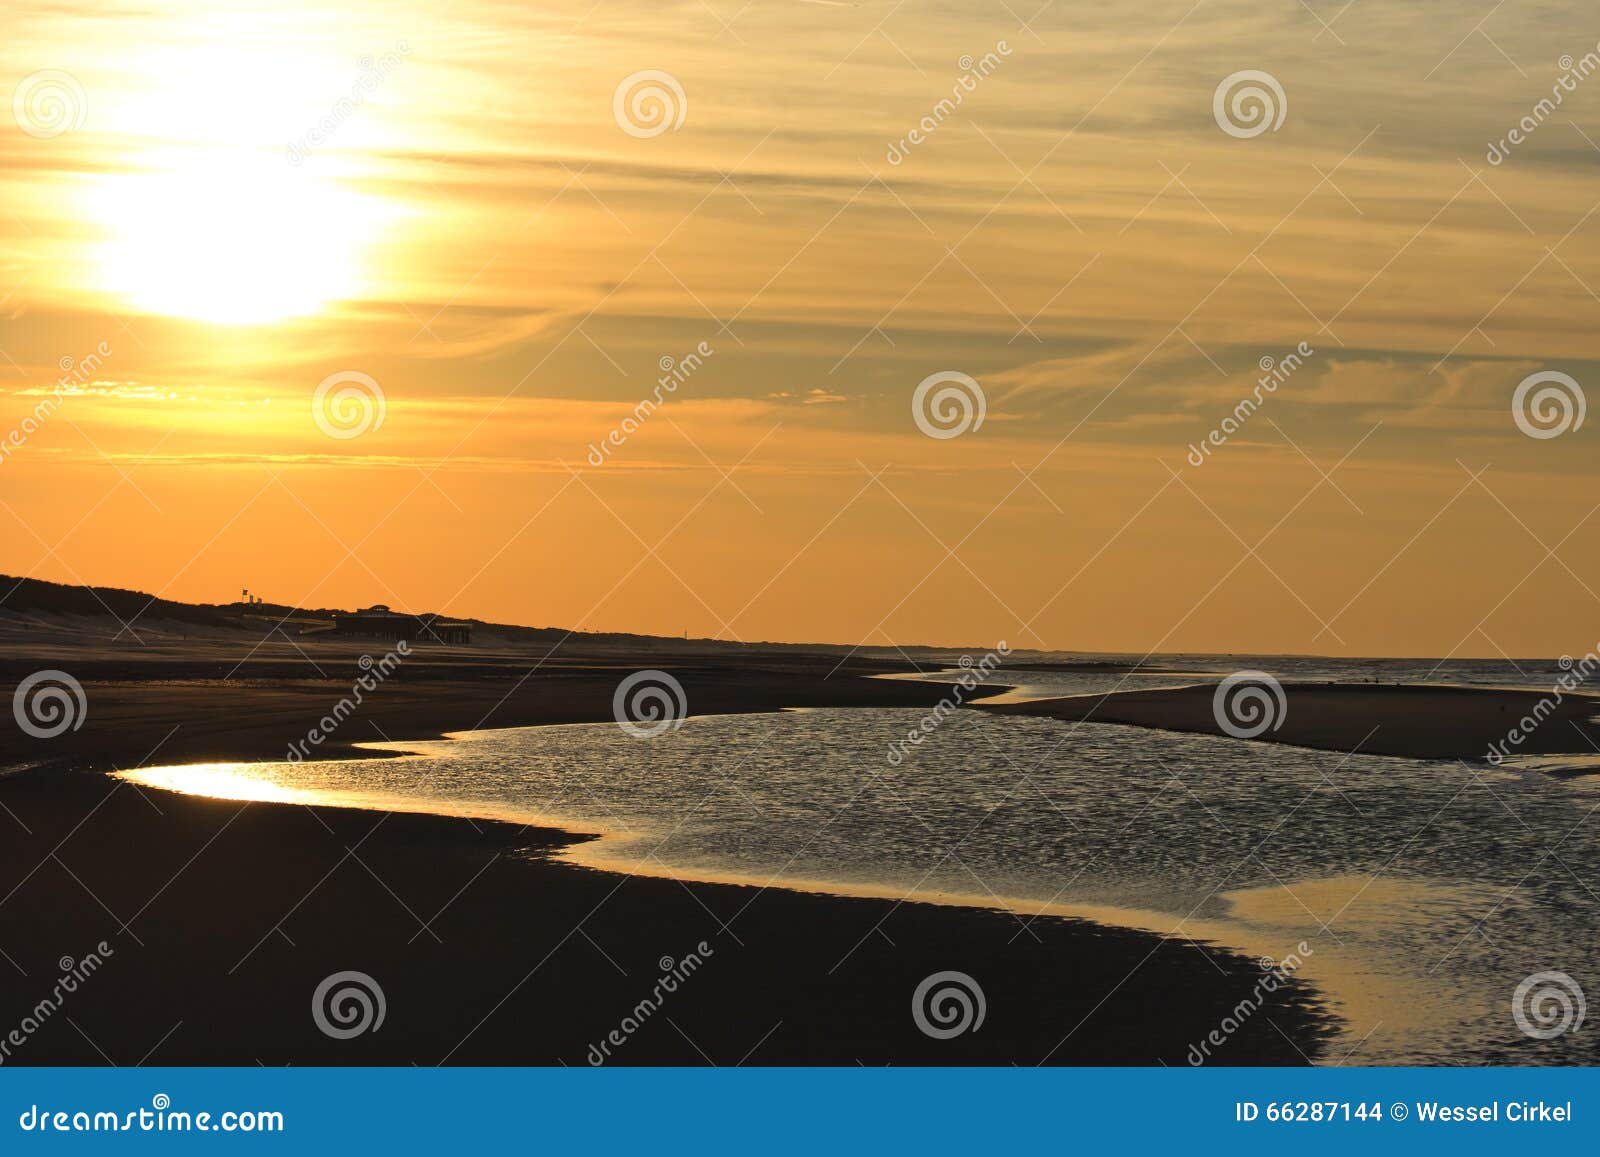 dutch north sea at sunset, ameland